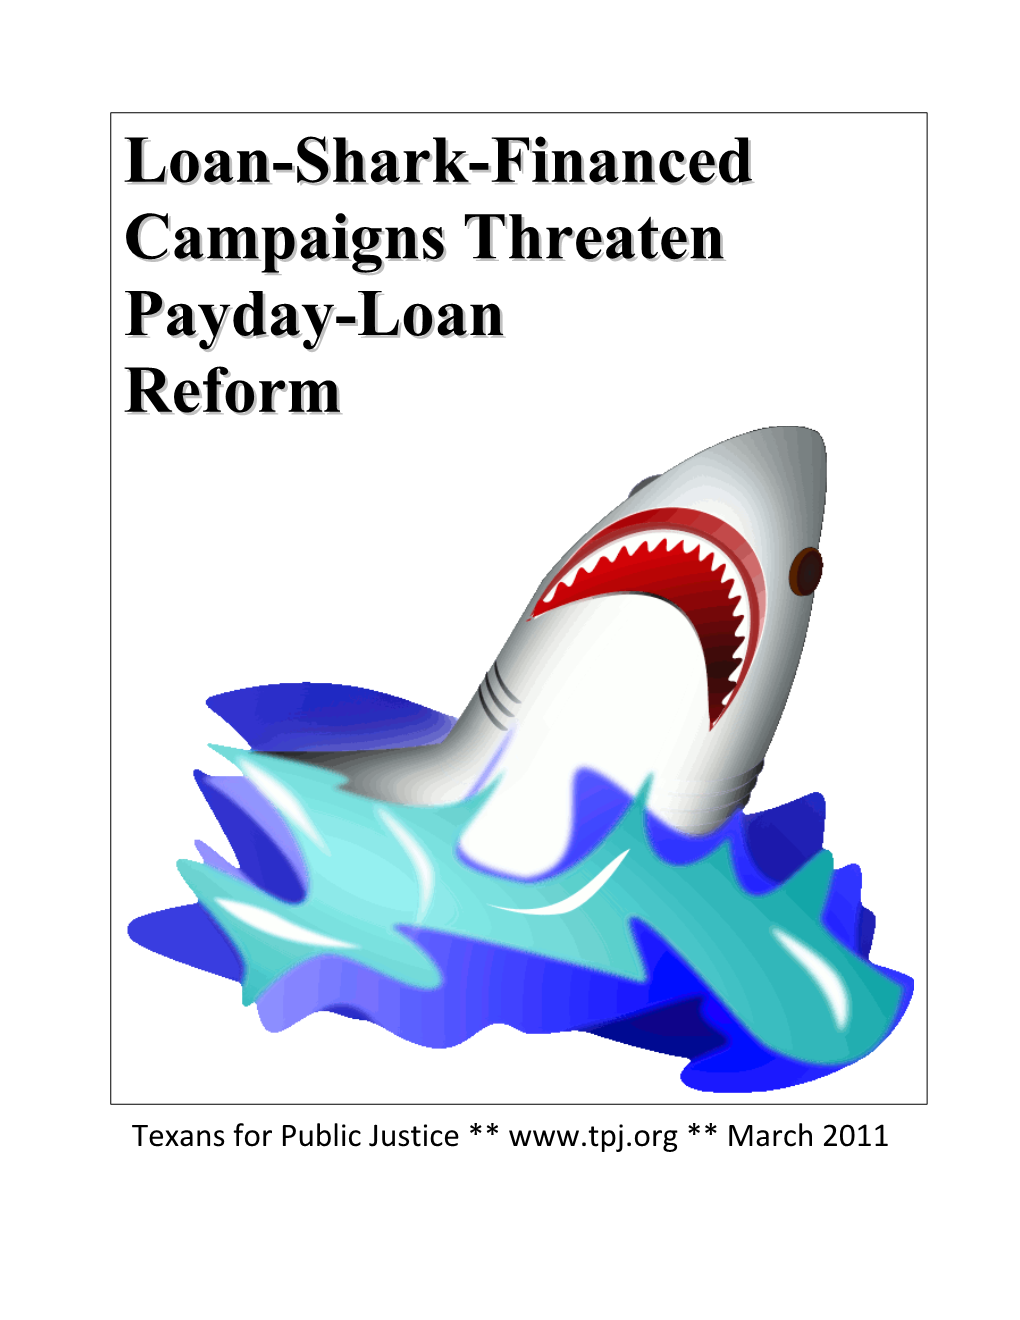 Loan-Shark-Financed Campaigns Threaten Payday-Loan Reform